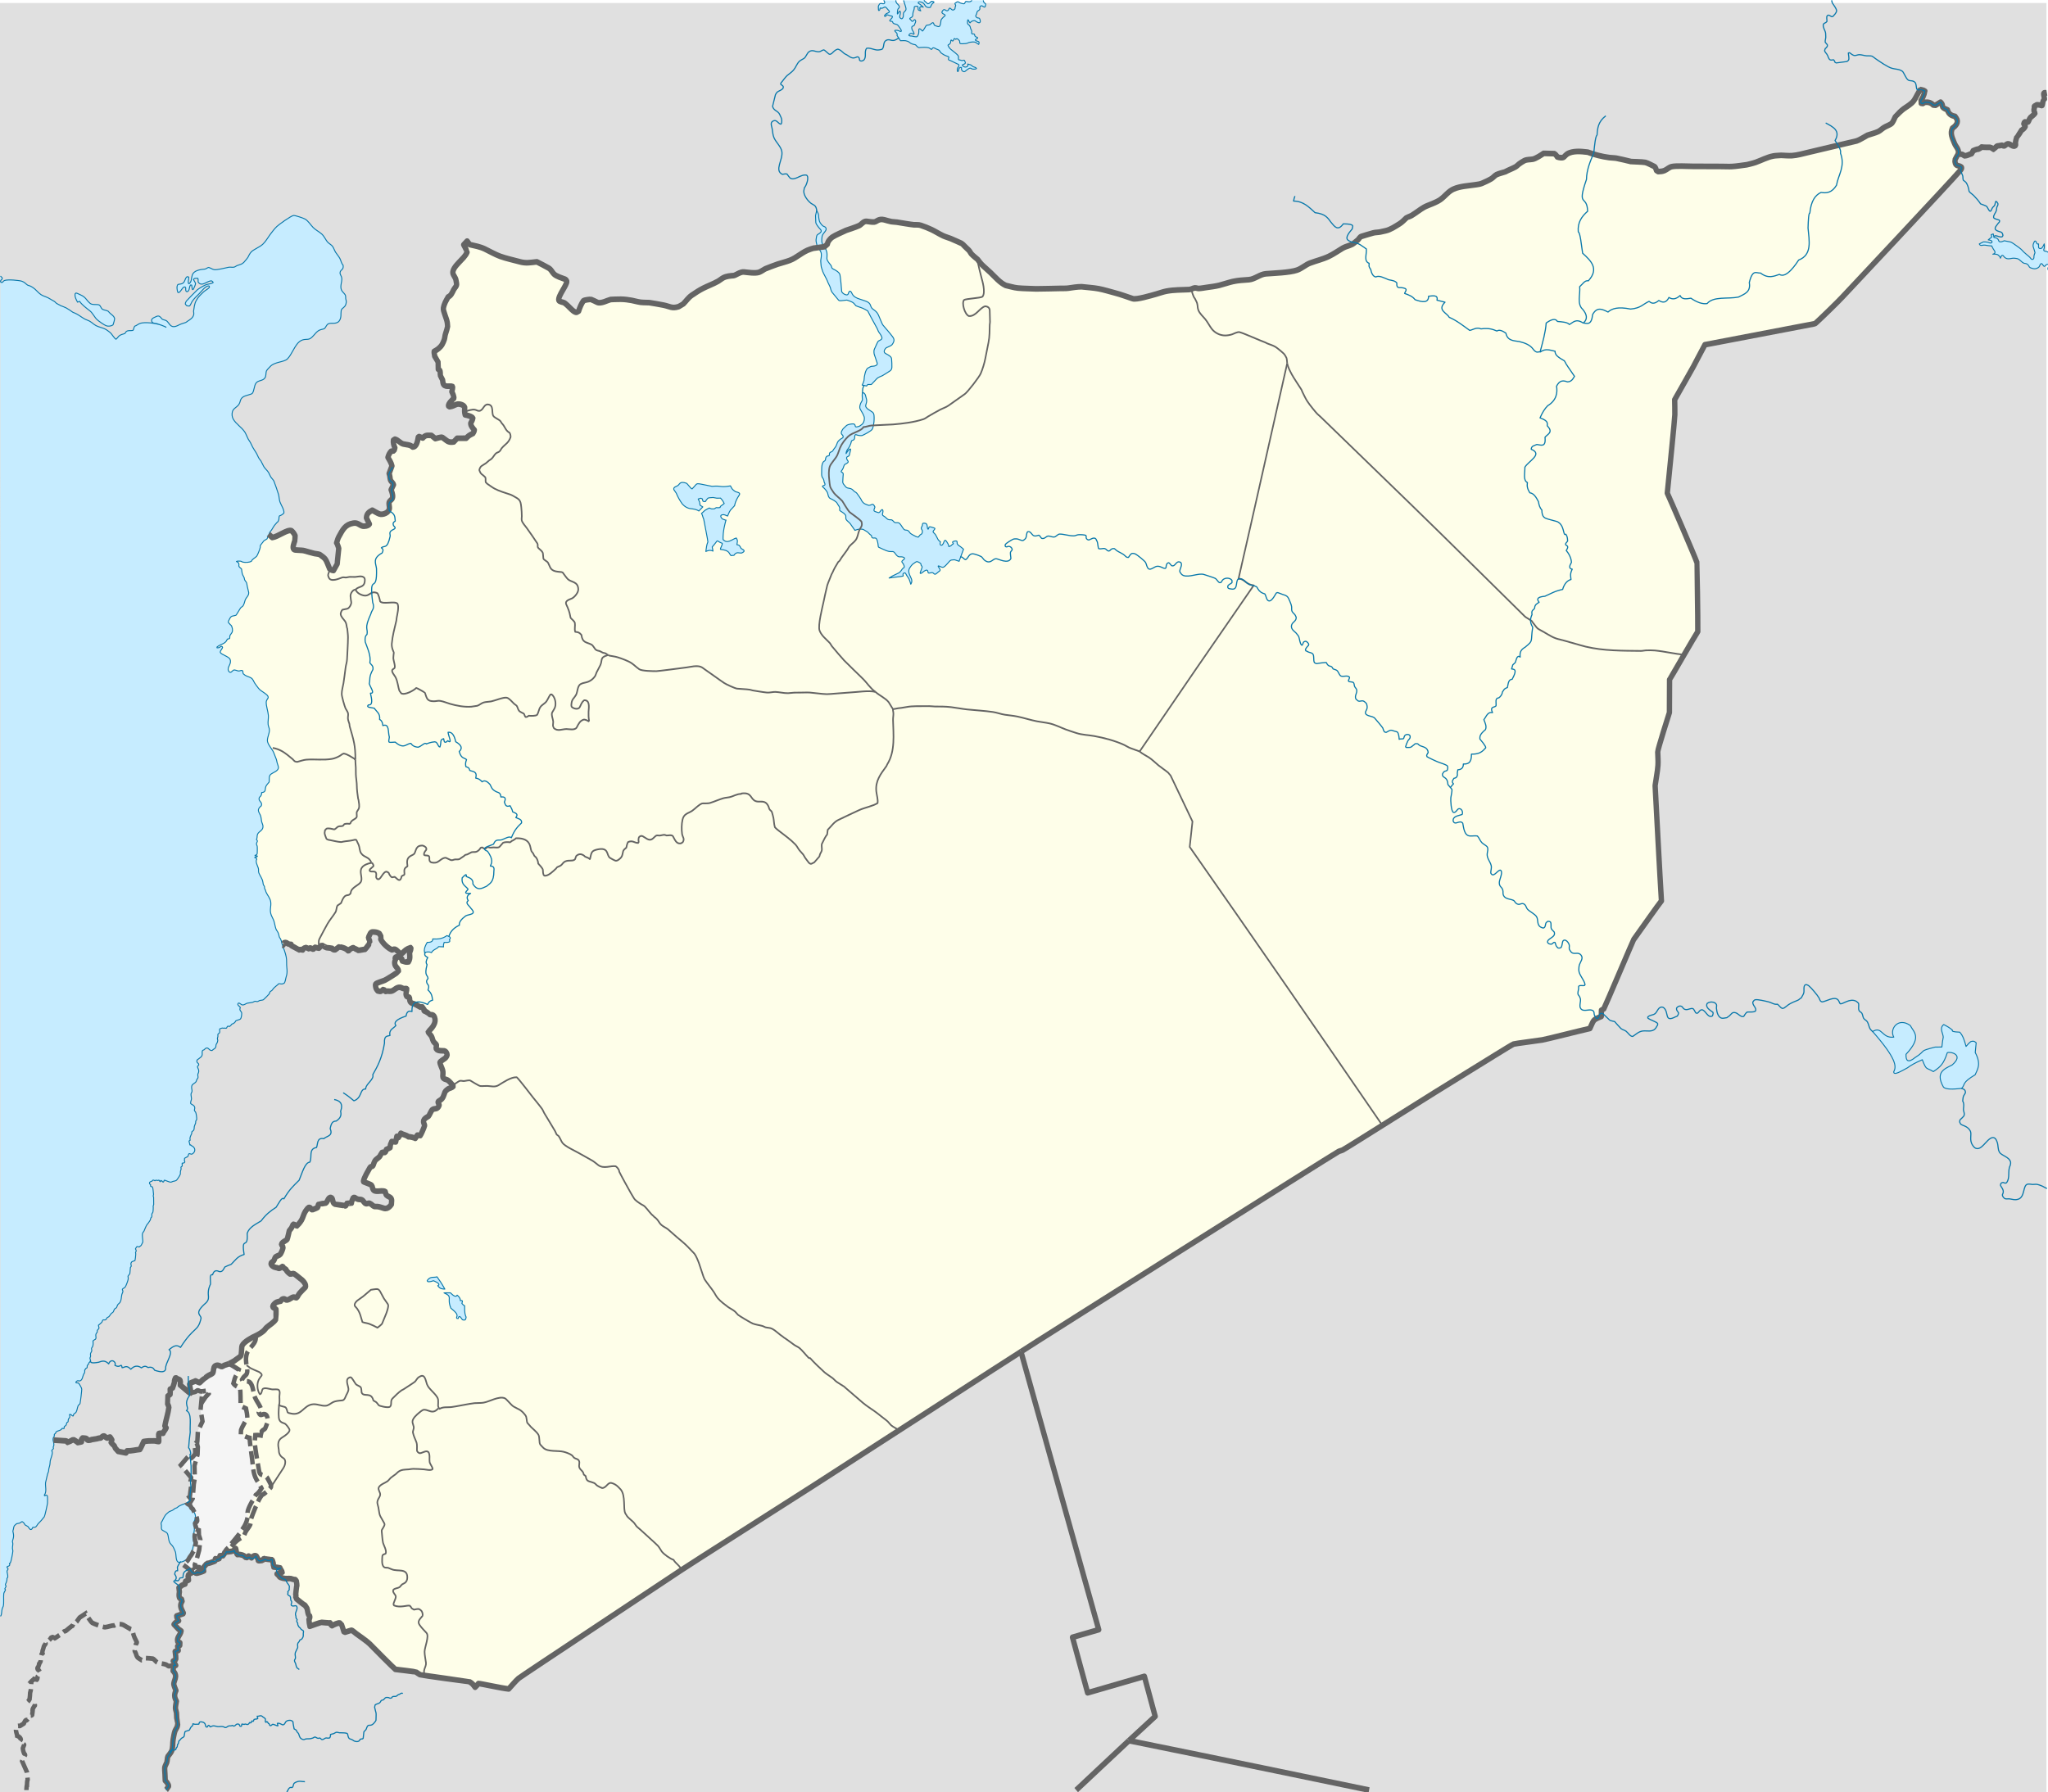 Lothar von Richthofen/Template:Syrian civil war detailed map (Damascus) is located in Syria